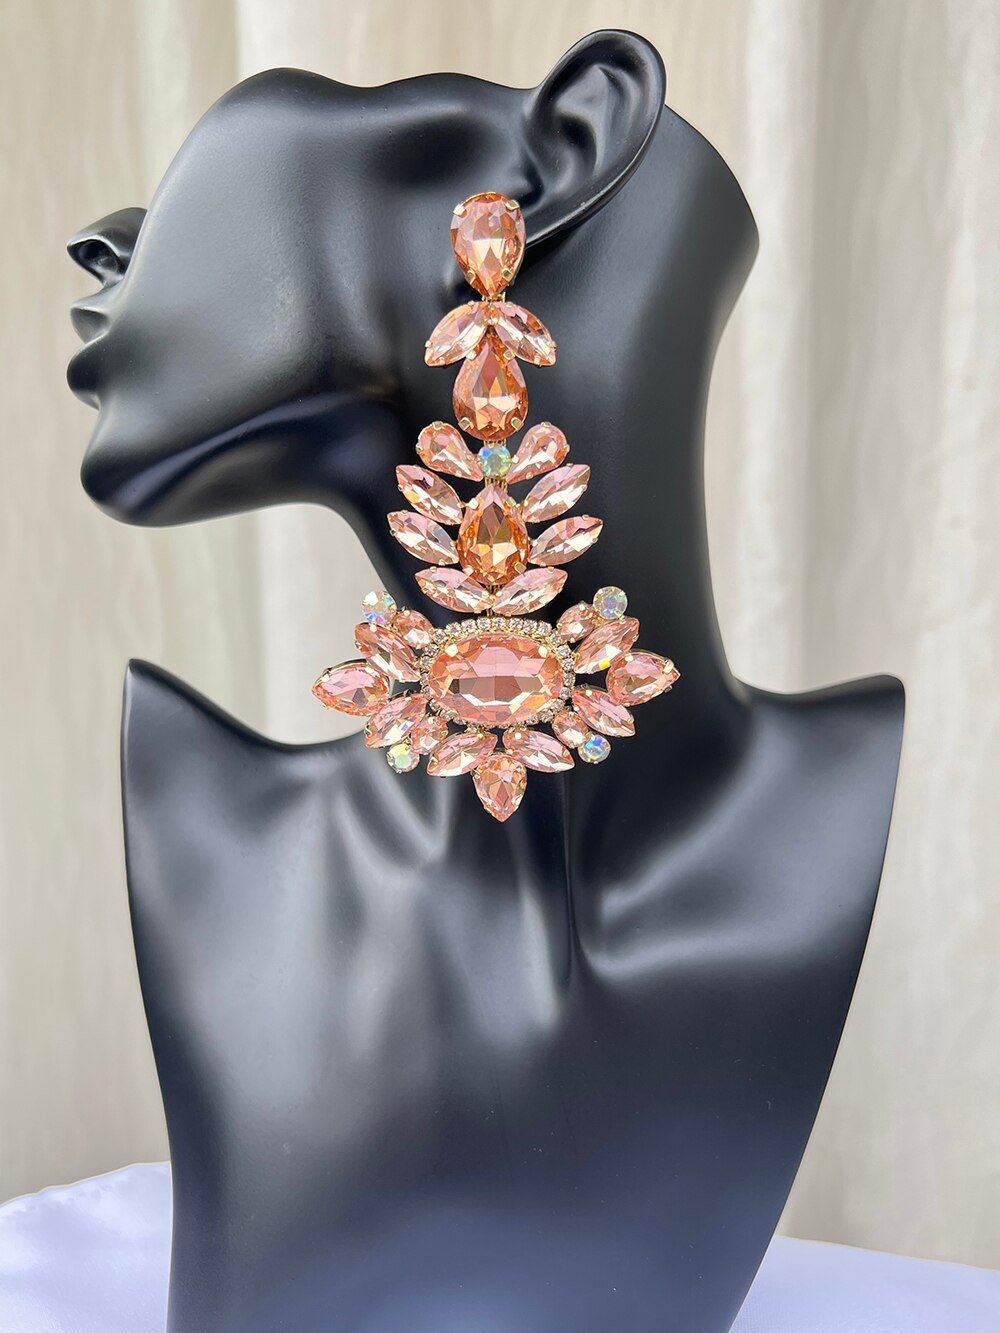 Gorgeous Rhinestone Geometric Earrings - Lively & Luxury